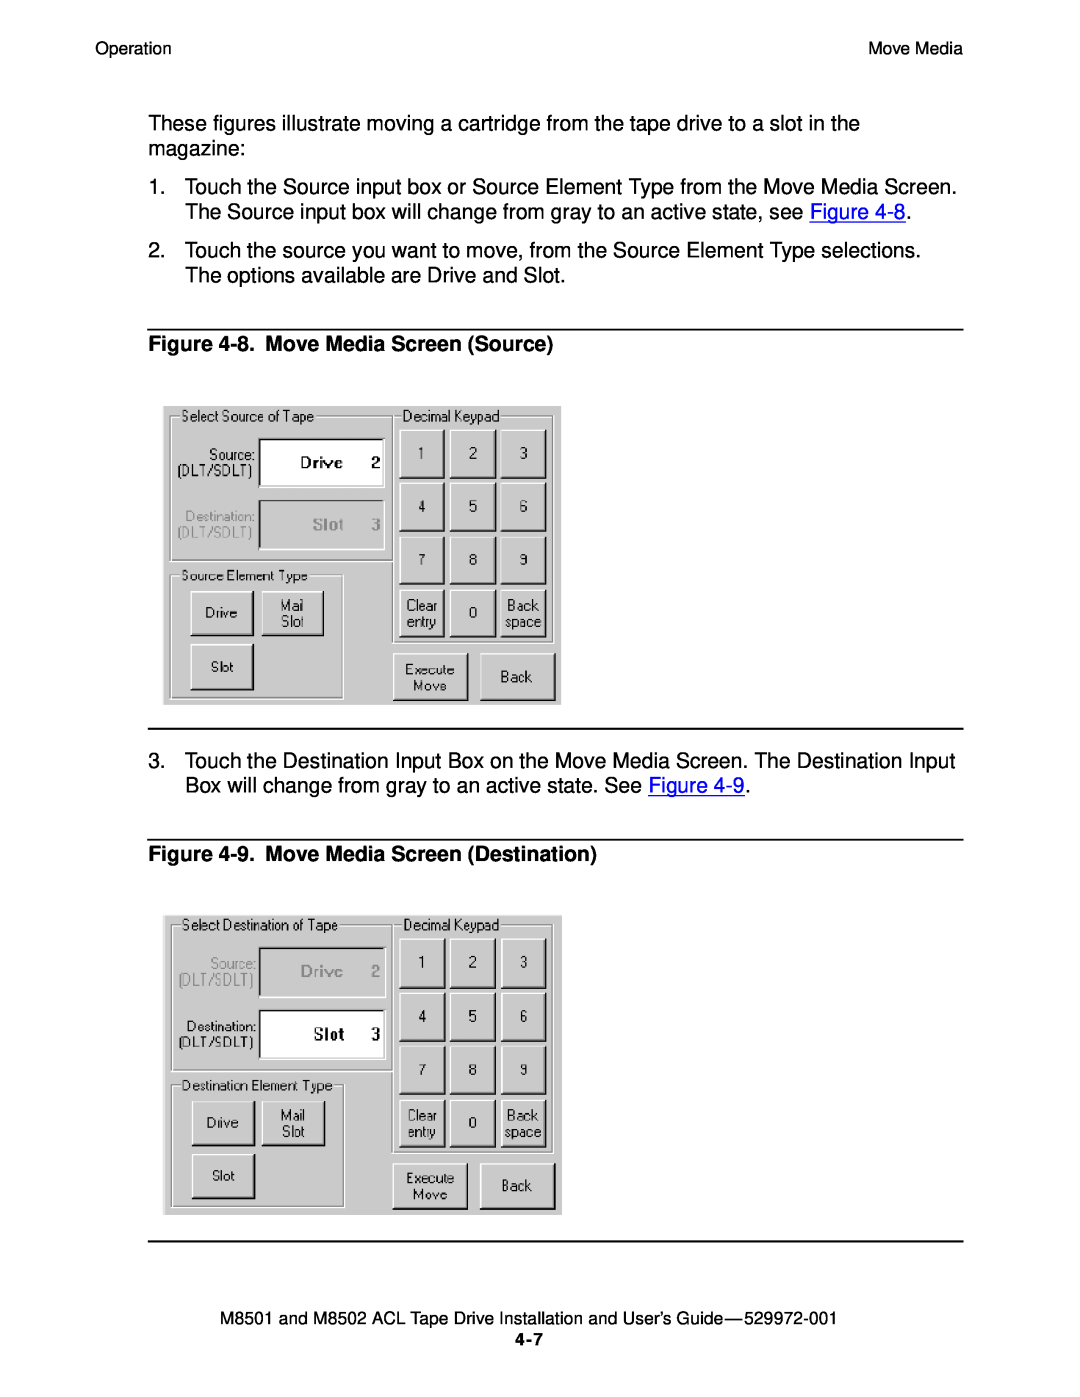 SMC Networks M8501 manual 8. Move Media Screen Source, 9. Move Media Screen Destination 